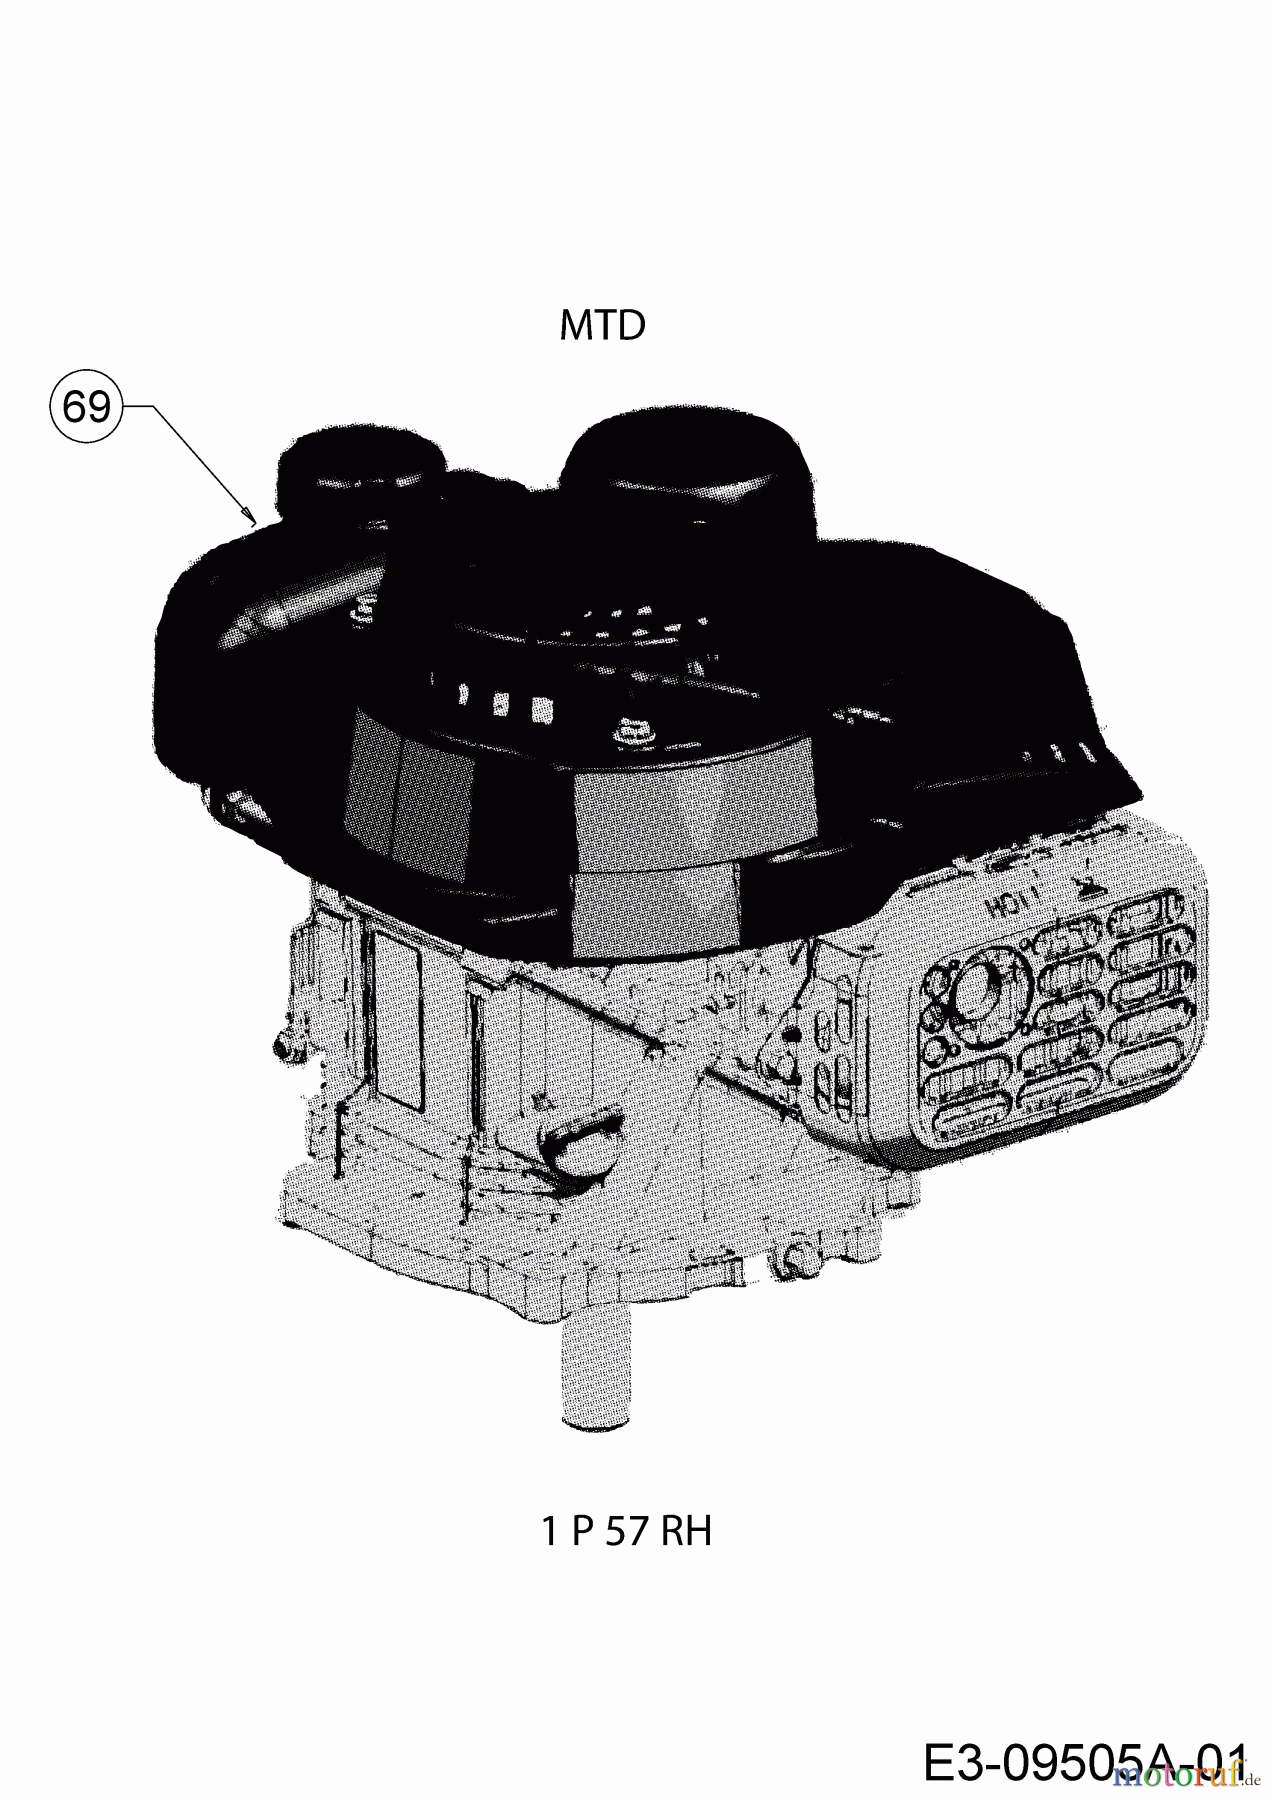  MTD Motormäher Smart 46 PO 11C-TASJ600  (2017) Motor MTD